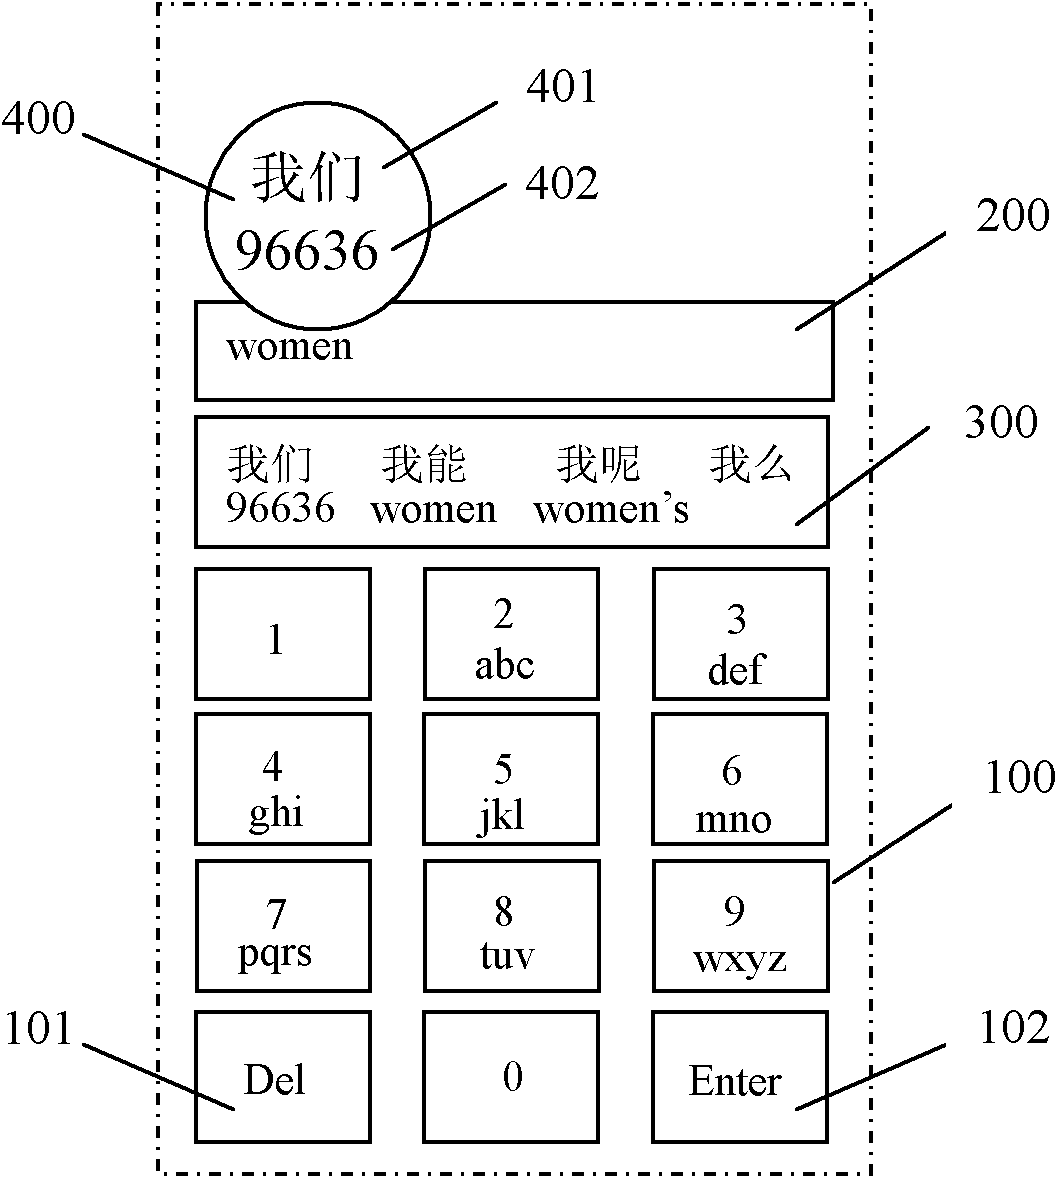 Multi-language hybrid input method used on embedded touch screen virtual keyboard